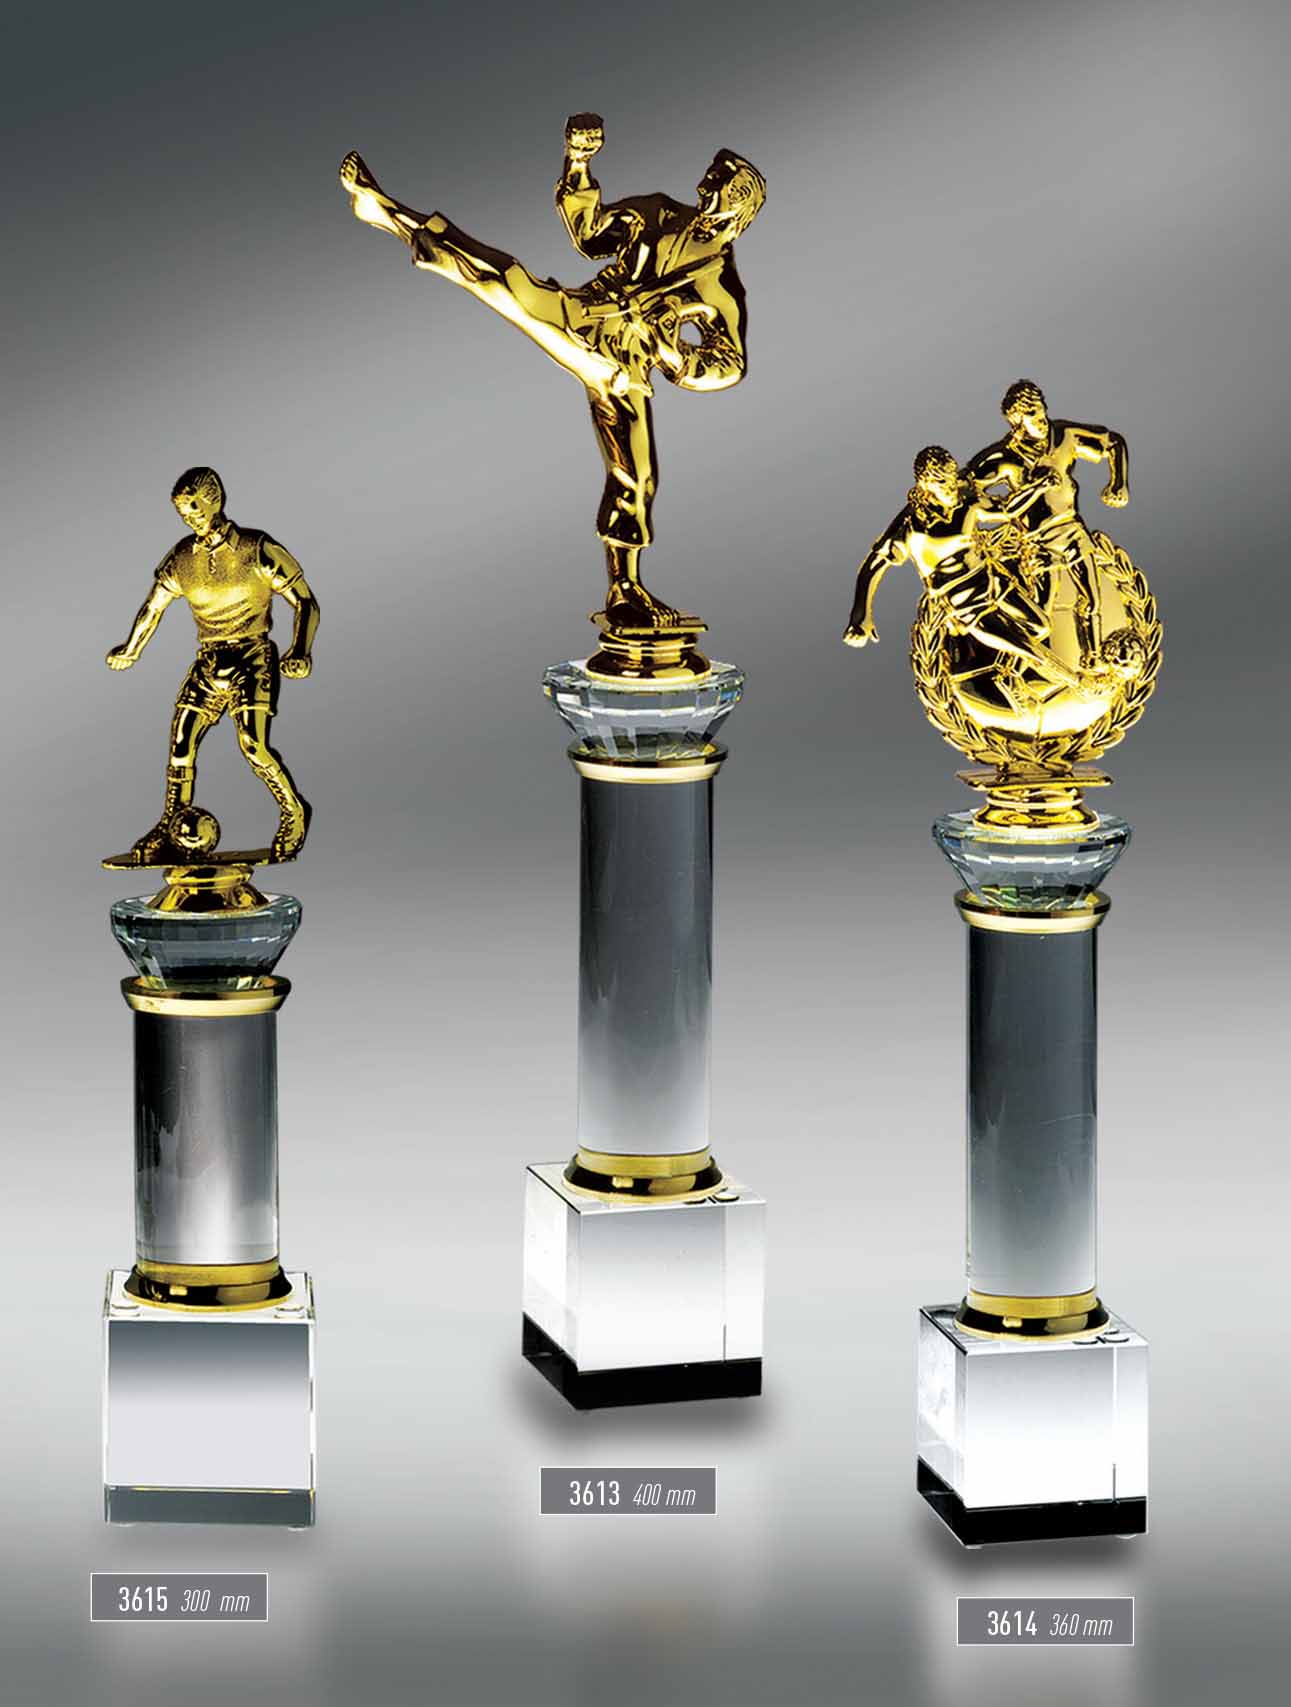 3613 - 3614 - 3615  -  Sport Award